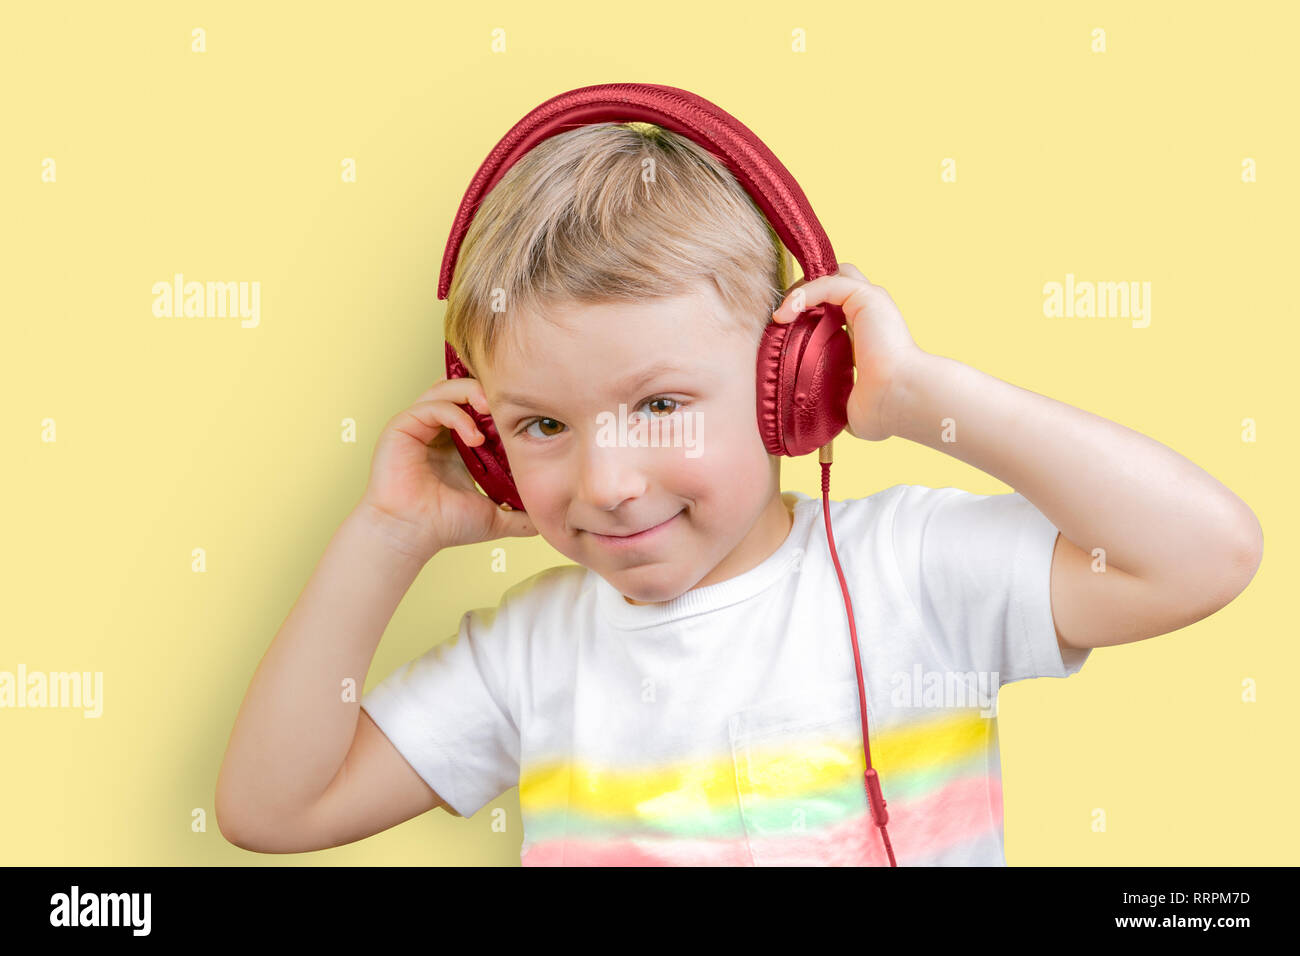 Young boy listening to headphones Stock Photo